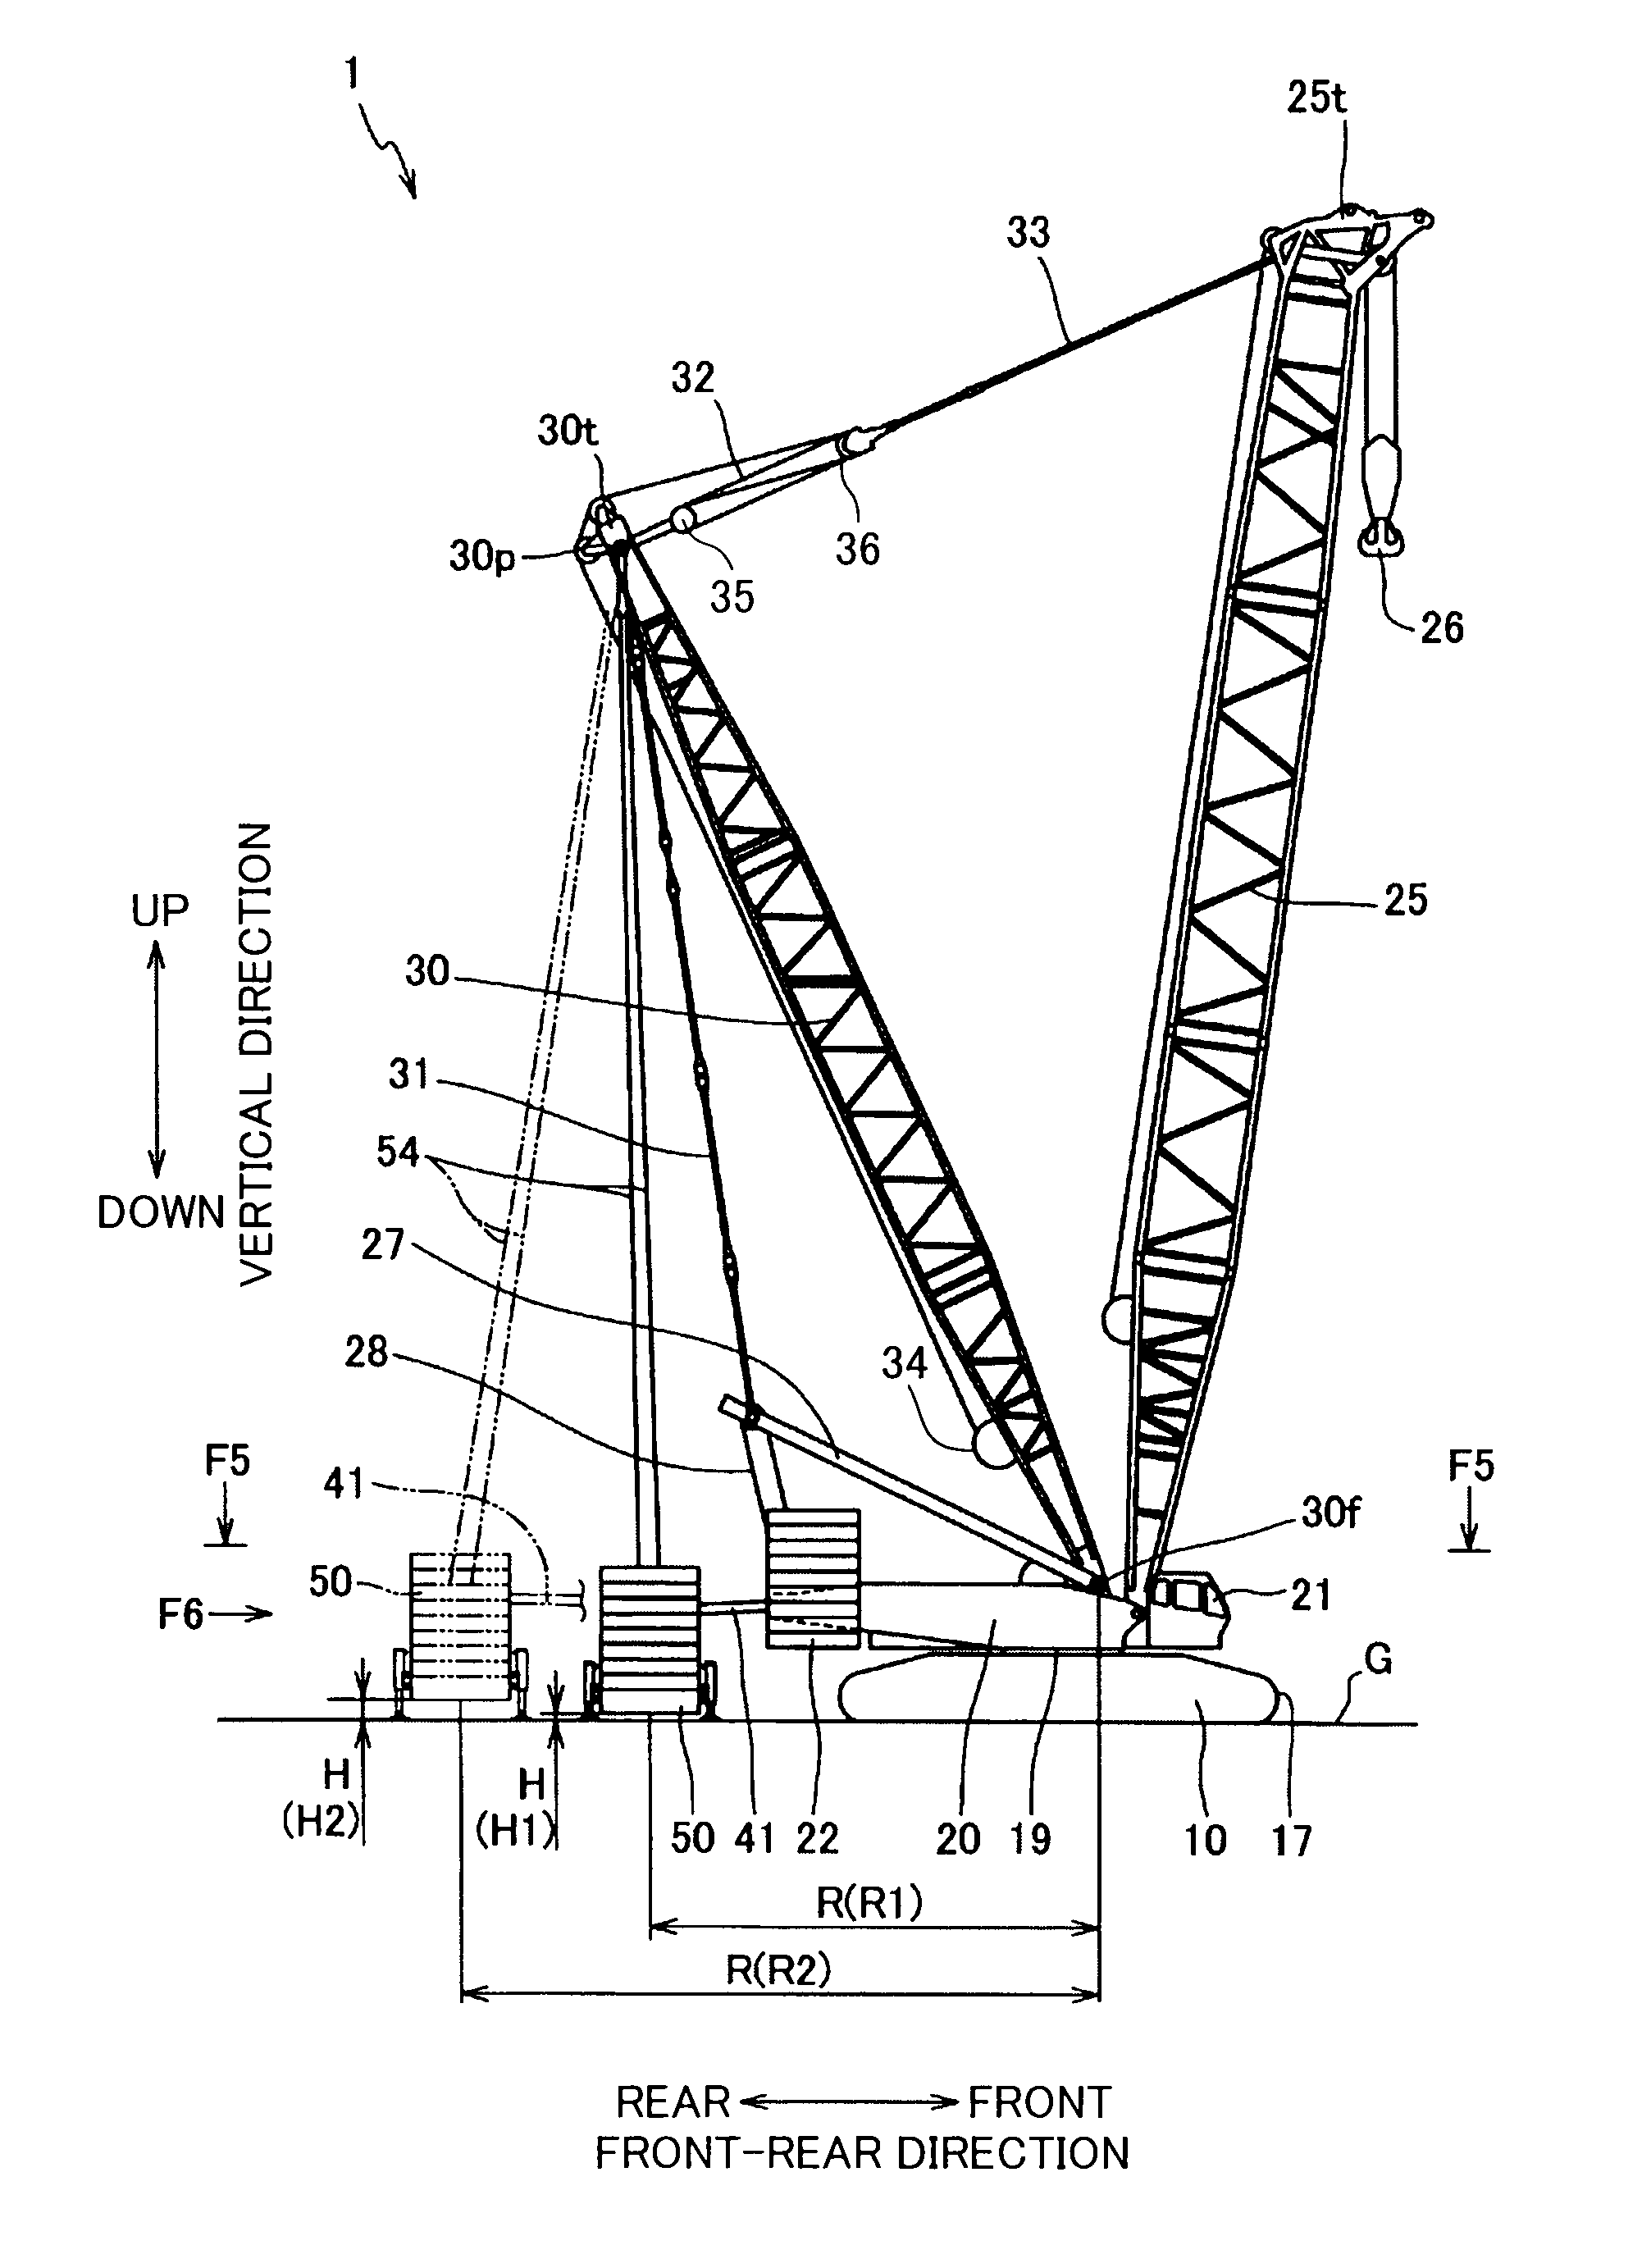 Mobile crane having counterweight